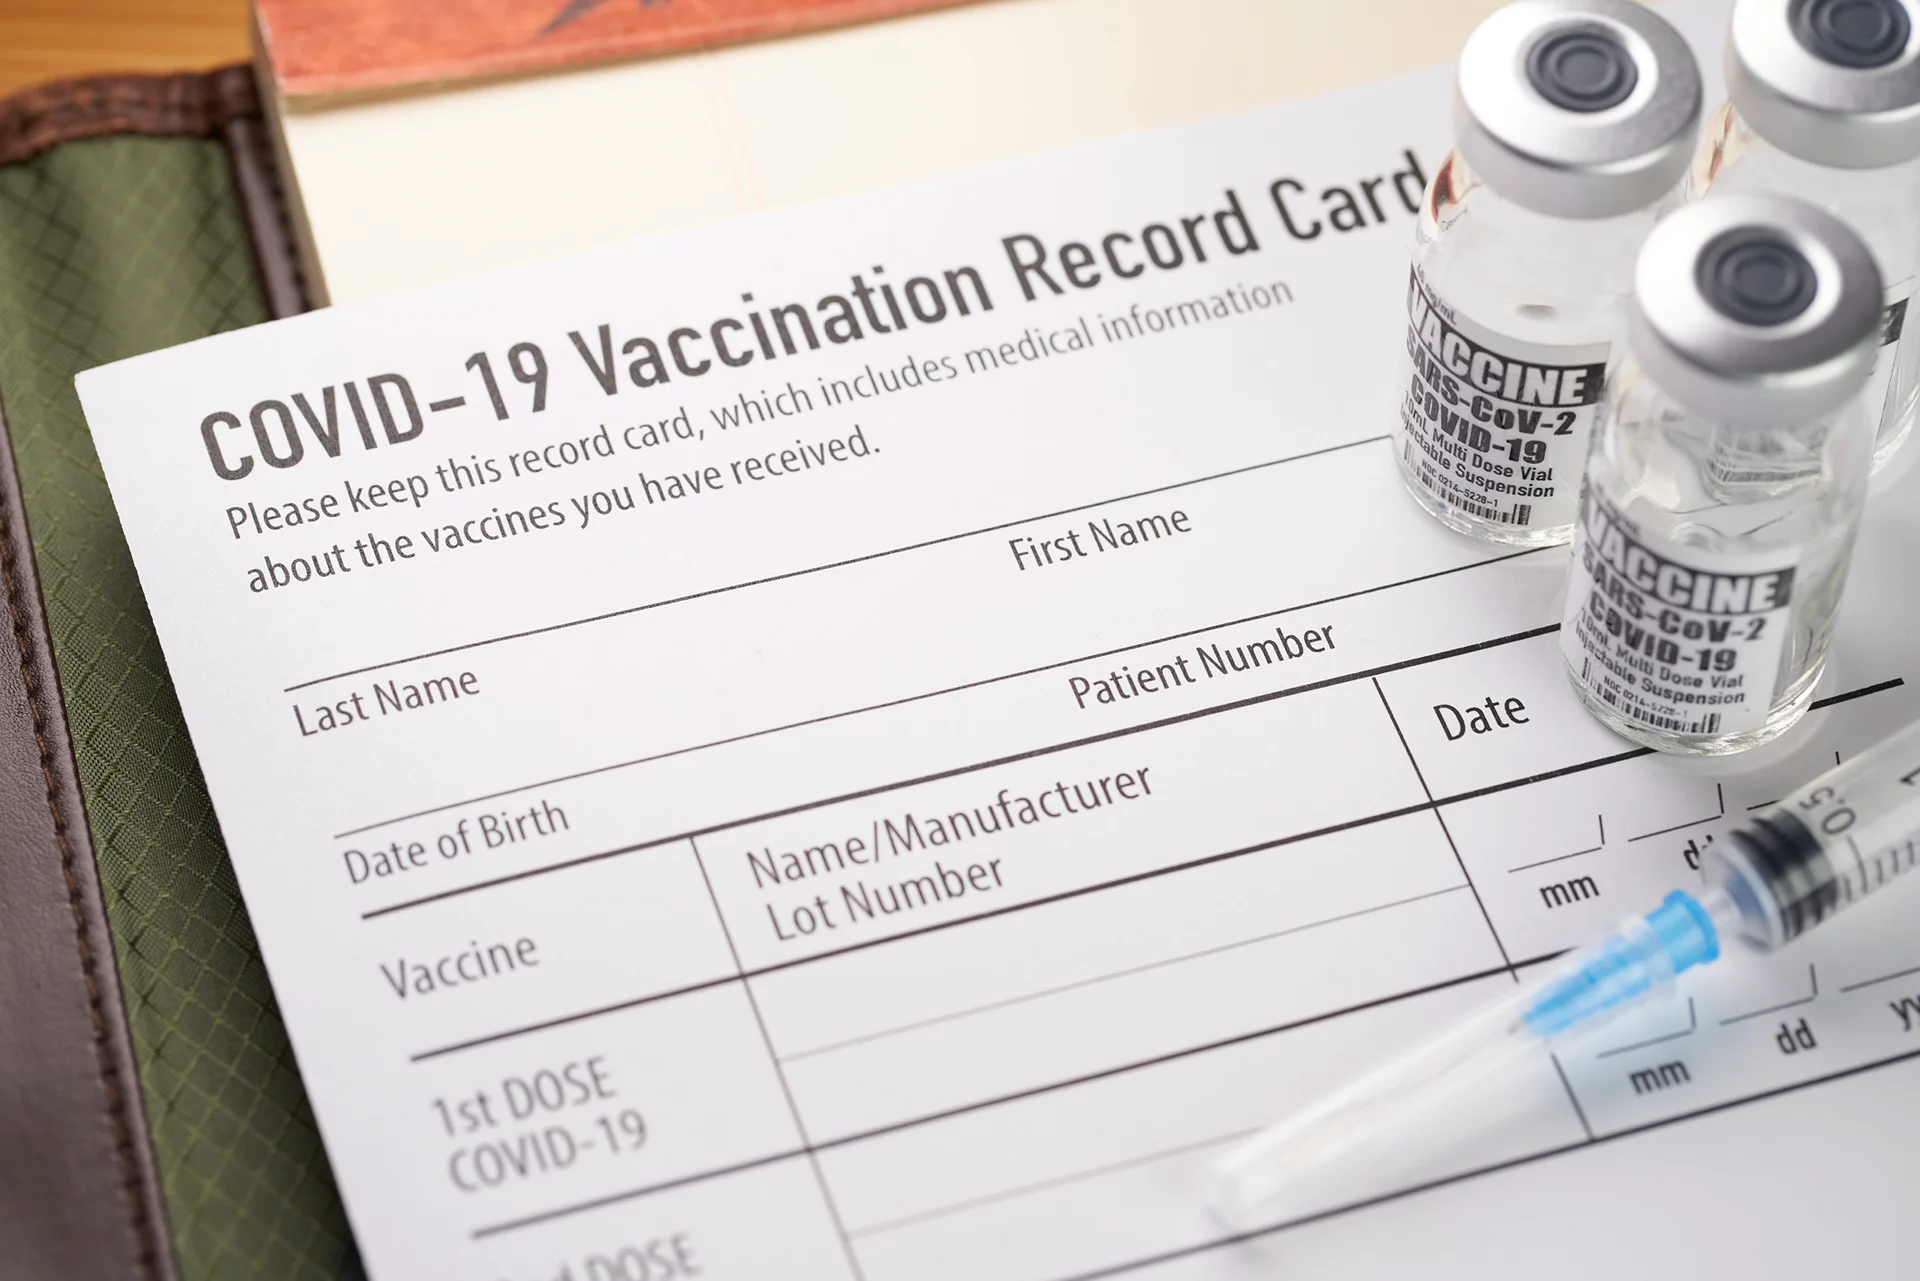 vaccination record card for Covid vaccine